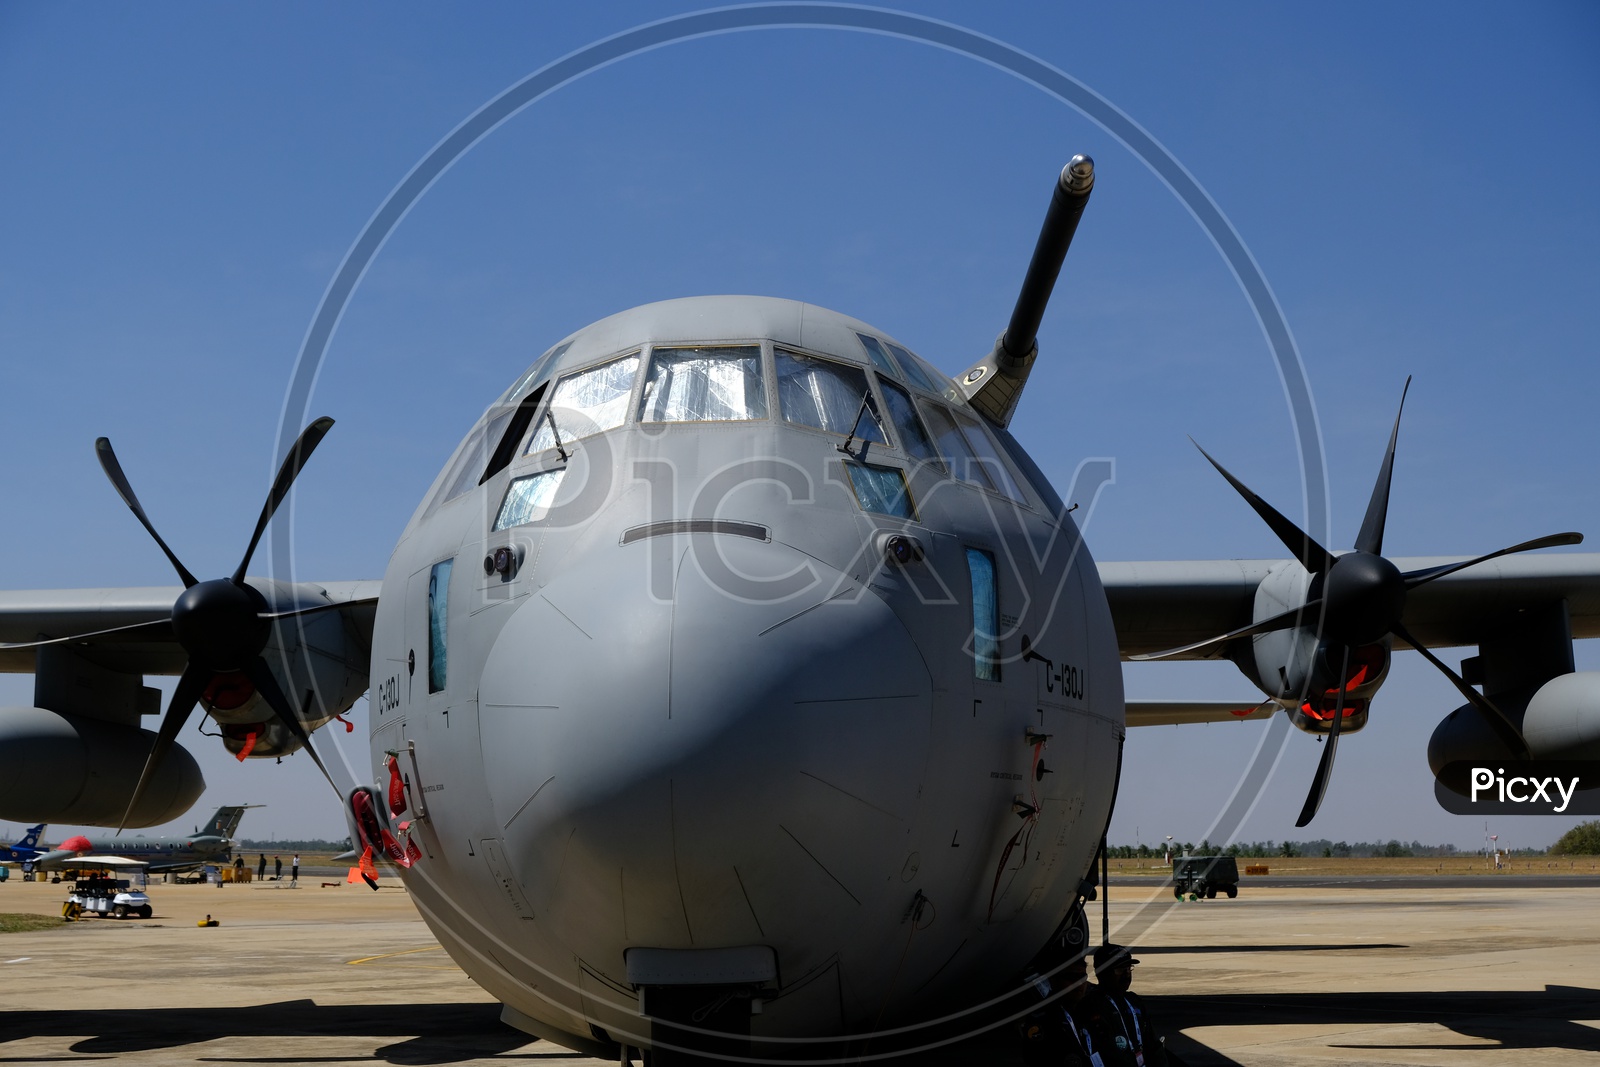 Indian Air Force C 130 J Super Hercules at Bangalore Aero India 2019